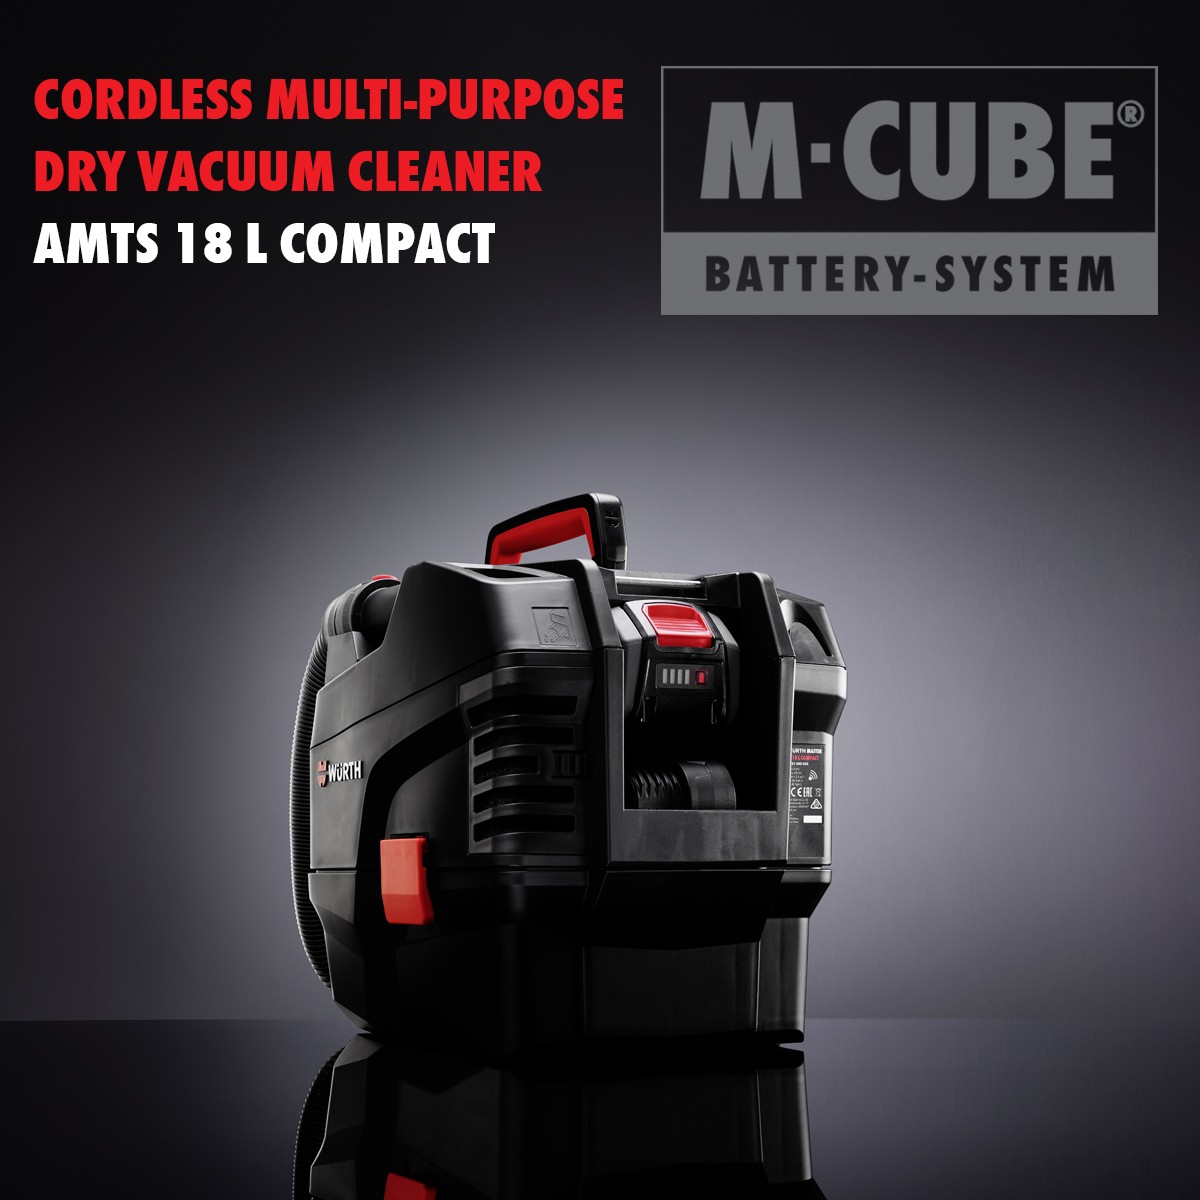 CORDLESS MULTI-PURPOSE DRY VACUUM CLEANER AMTS 18 L COMPACT M-CUBE®